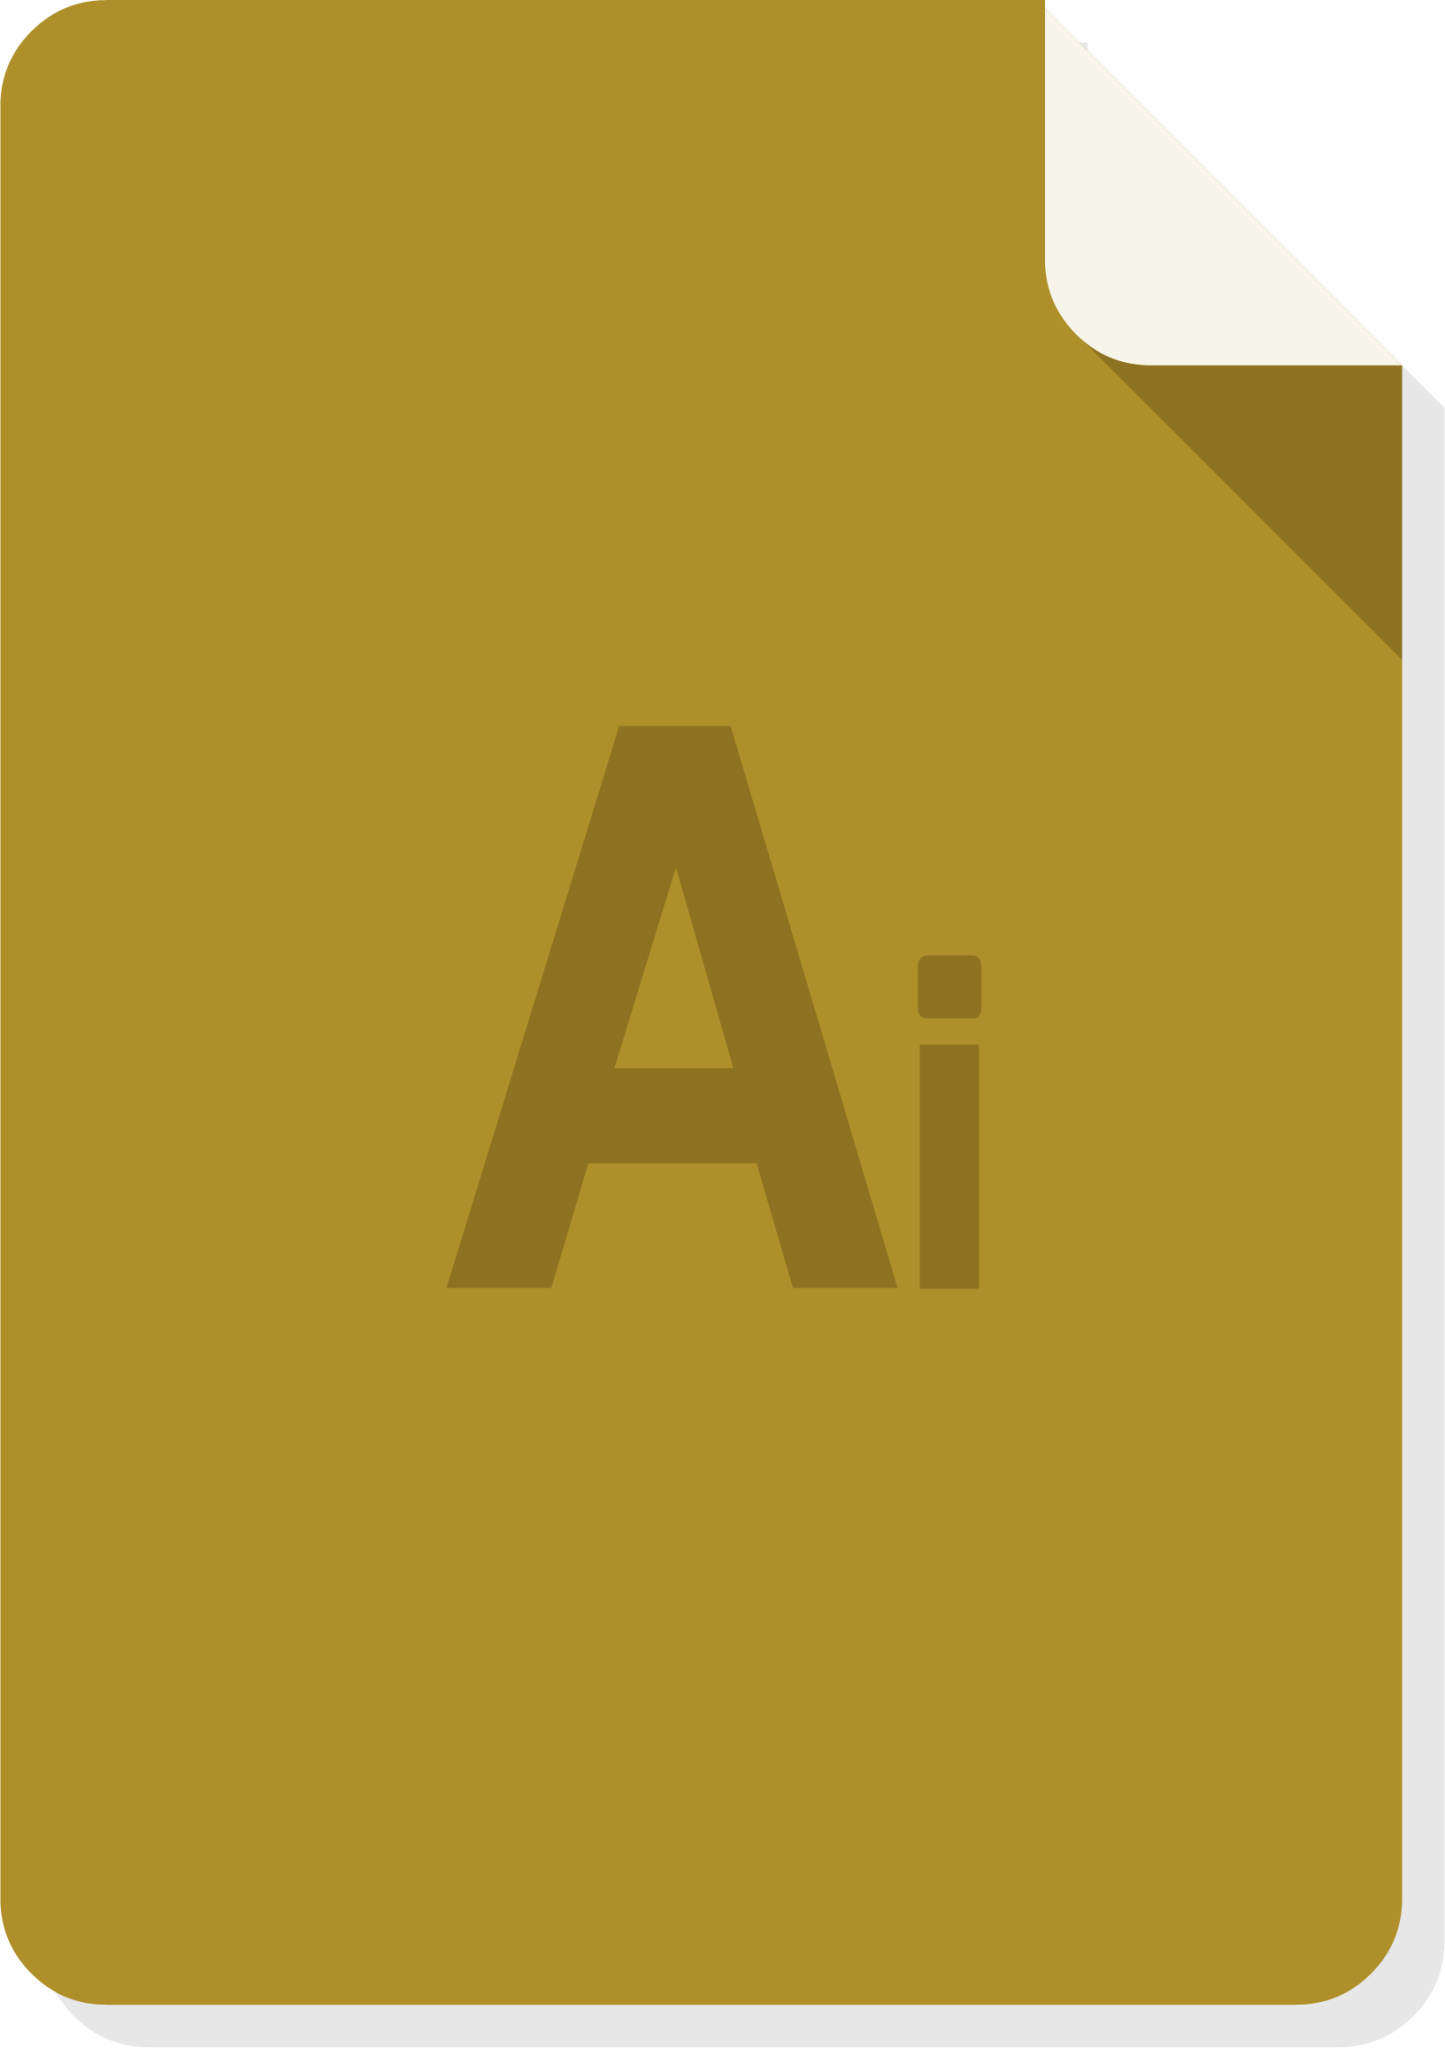 Files Types Adobe Illustrator icon